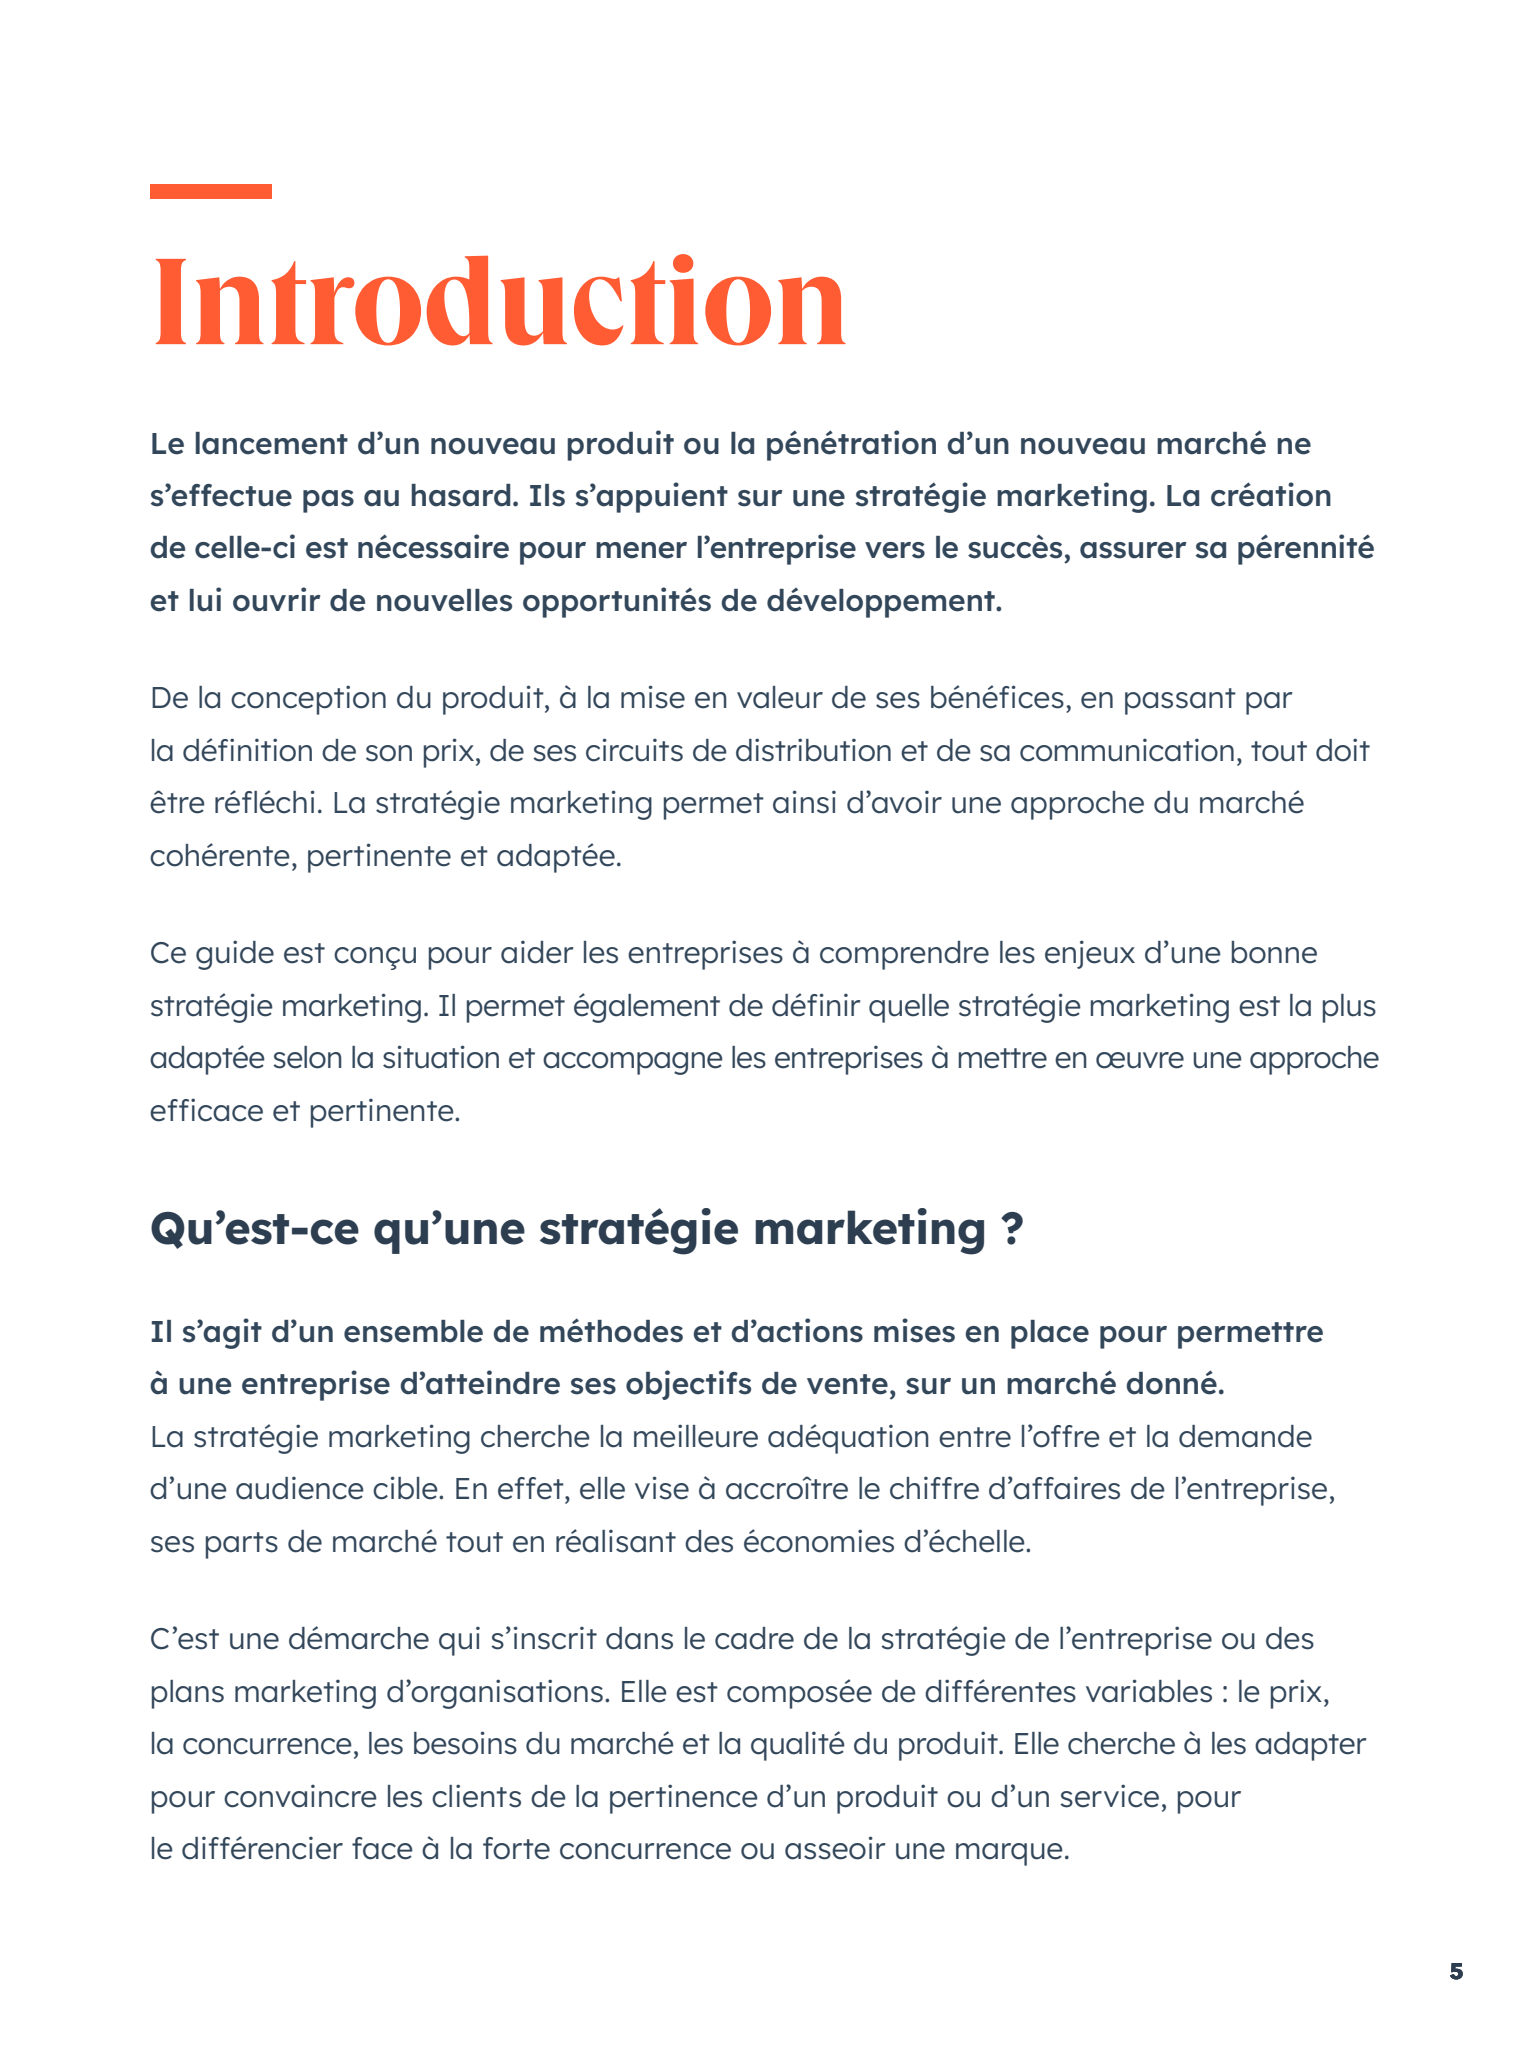 Introduction-marketing-strategie